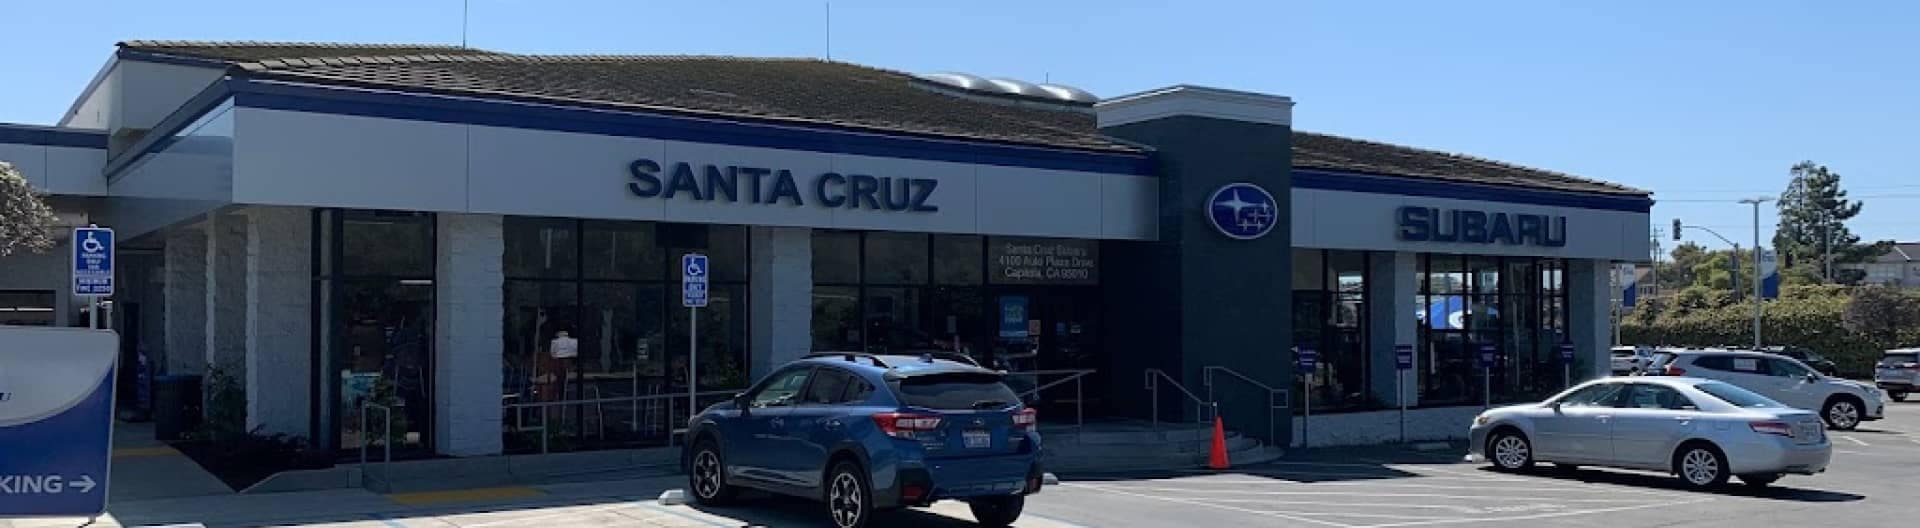 Santa Cruz Subaru - storefront